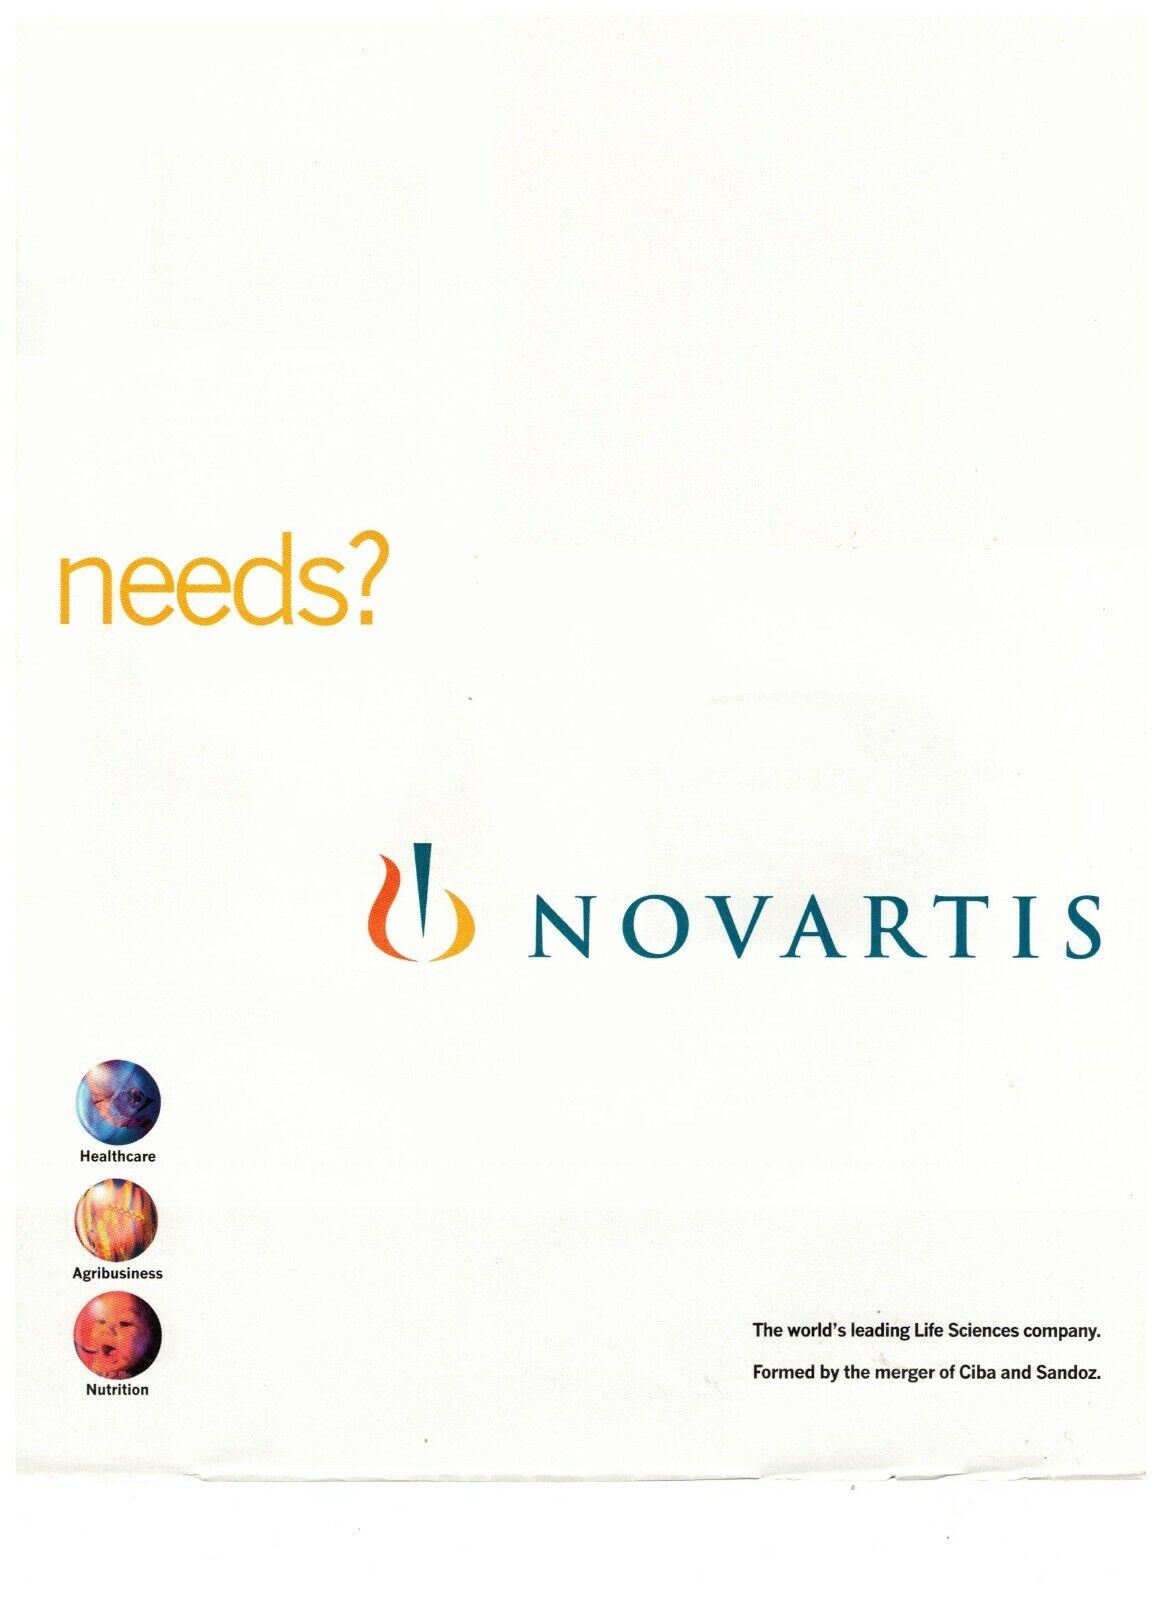 1997 Novartis Protect Crops Life Sciences Two Page Vintage Print Advertisement